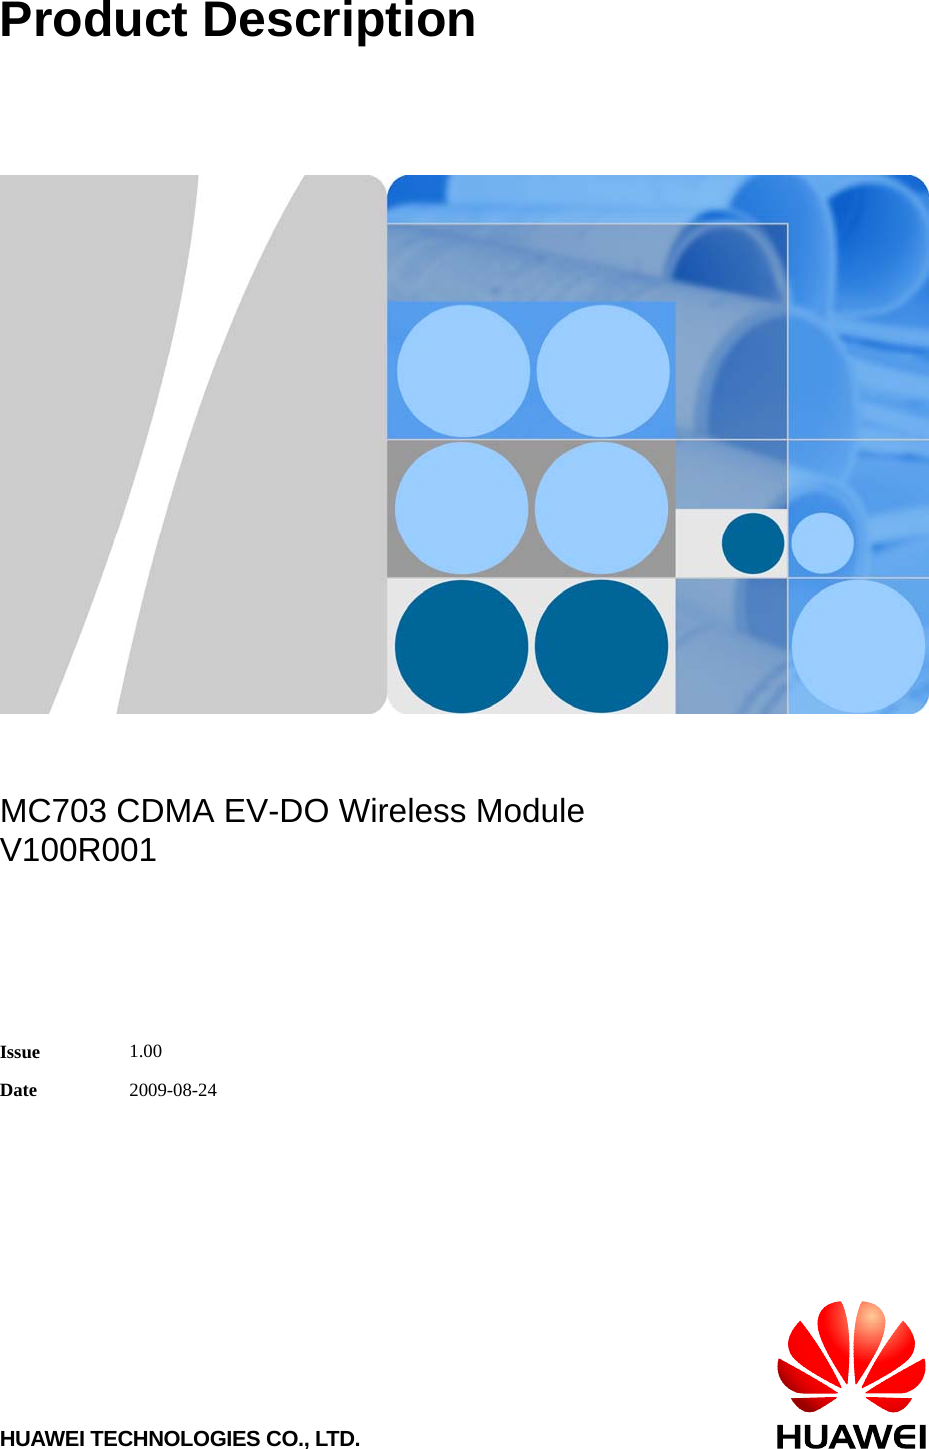  Product Description   MC703 CDMA EV-DO Wireless Module V100R001  Issue  1.00 Date  2009-08-24  HUAWEI TECHNOLOGIES CO., LTD.     